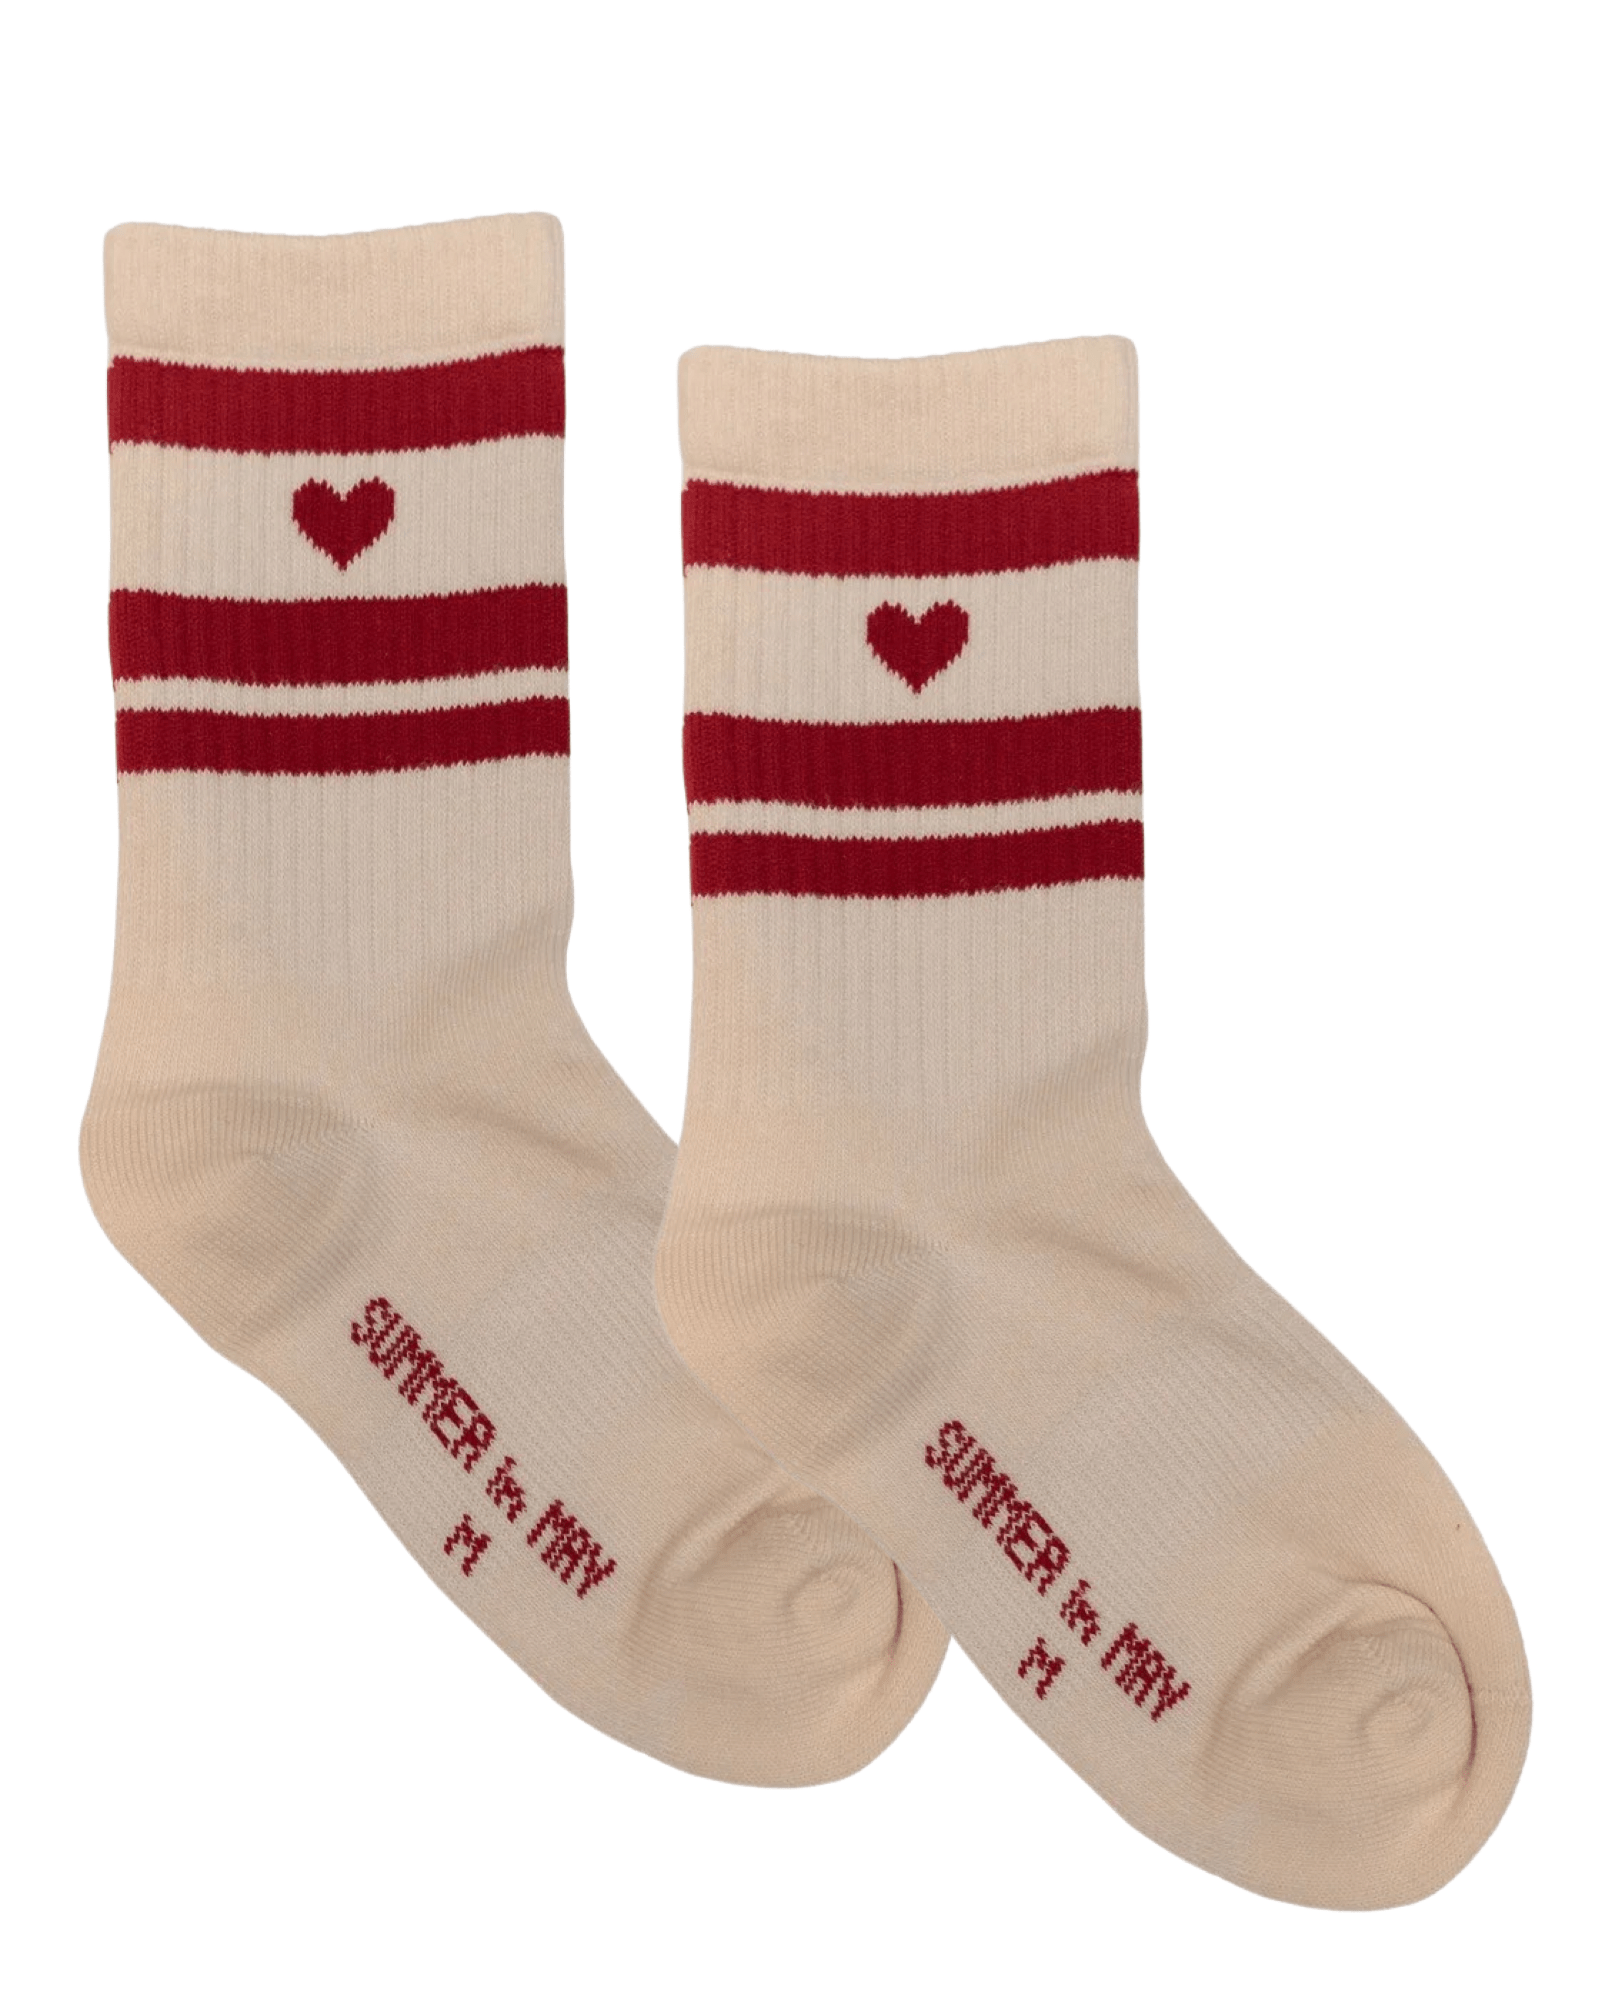 Socks - I heart you